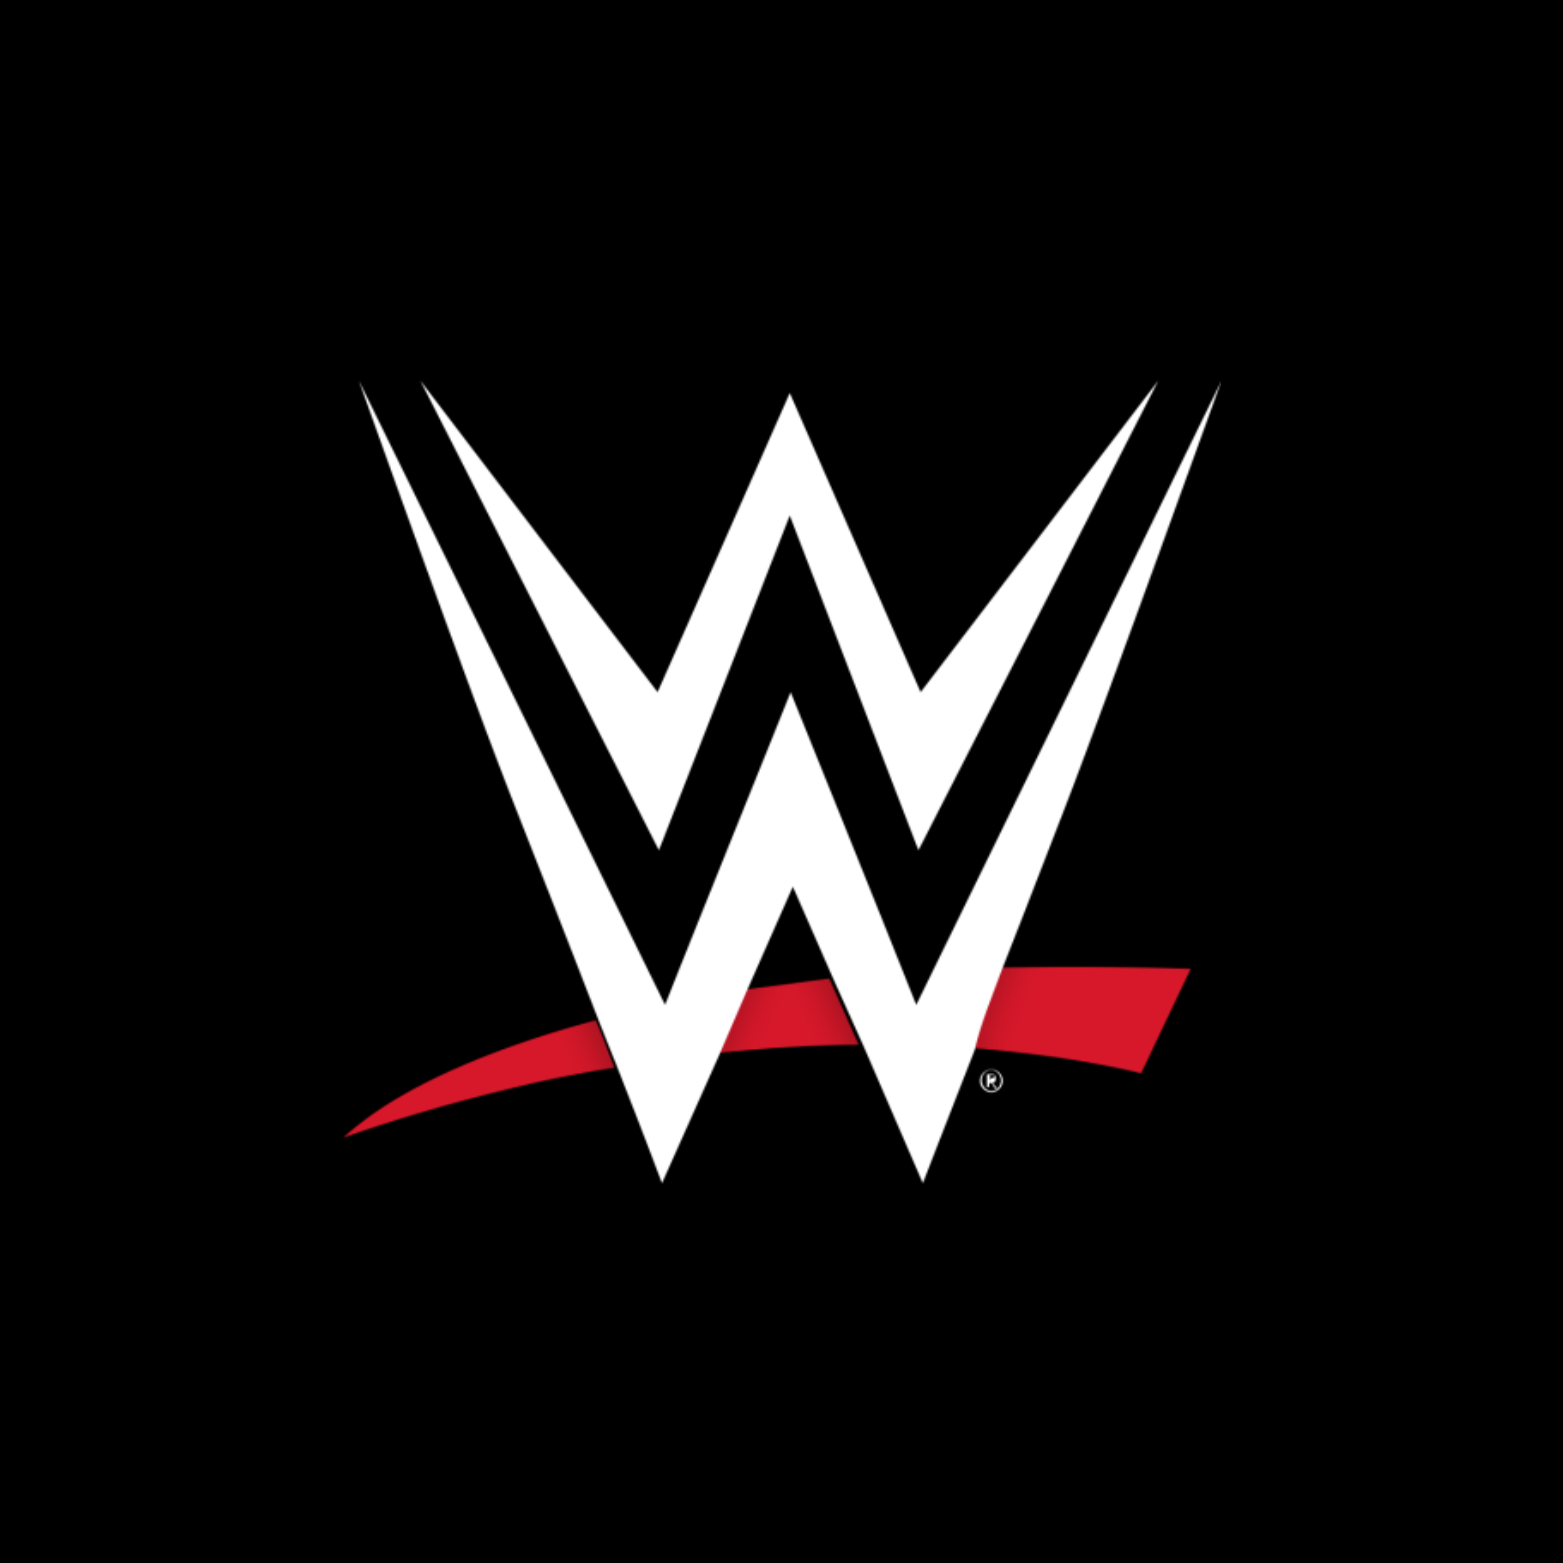 WWE Home Video UK